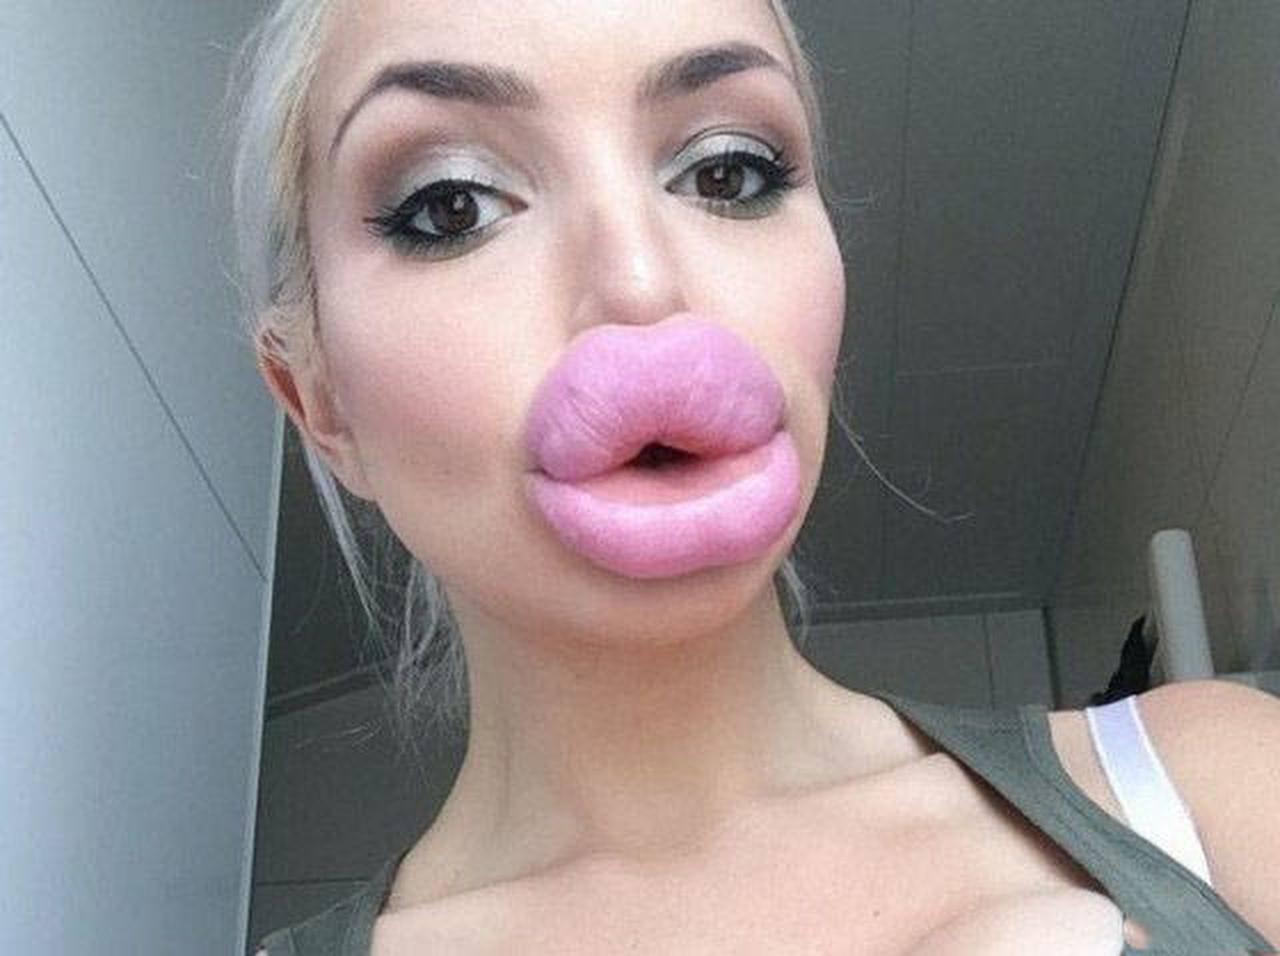 Fucking plastic lips